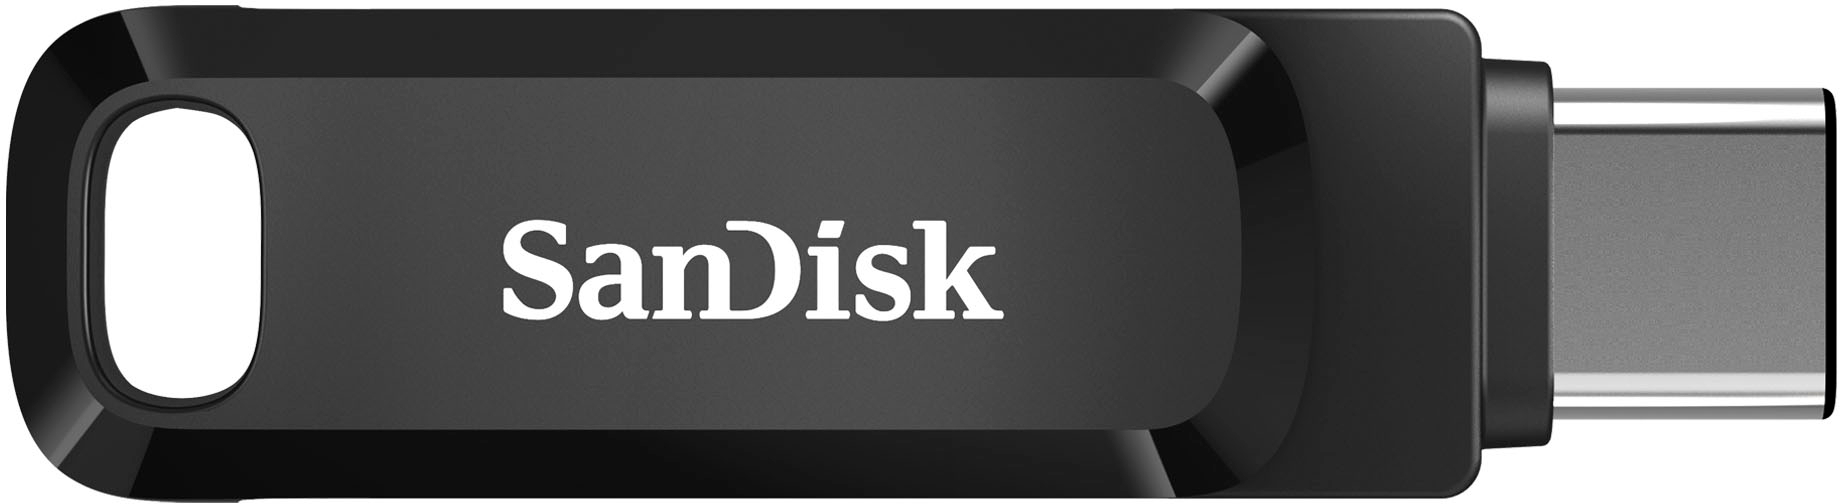 SanDisk Ultra Shift USB 3.2 Gen 1 Flash Drive